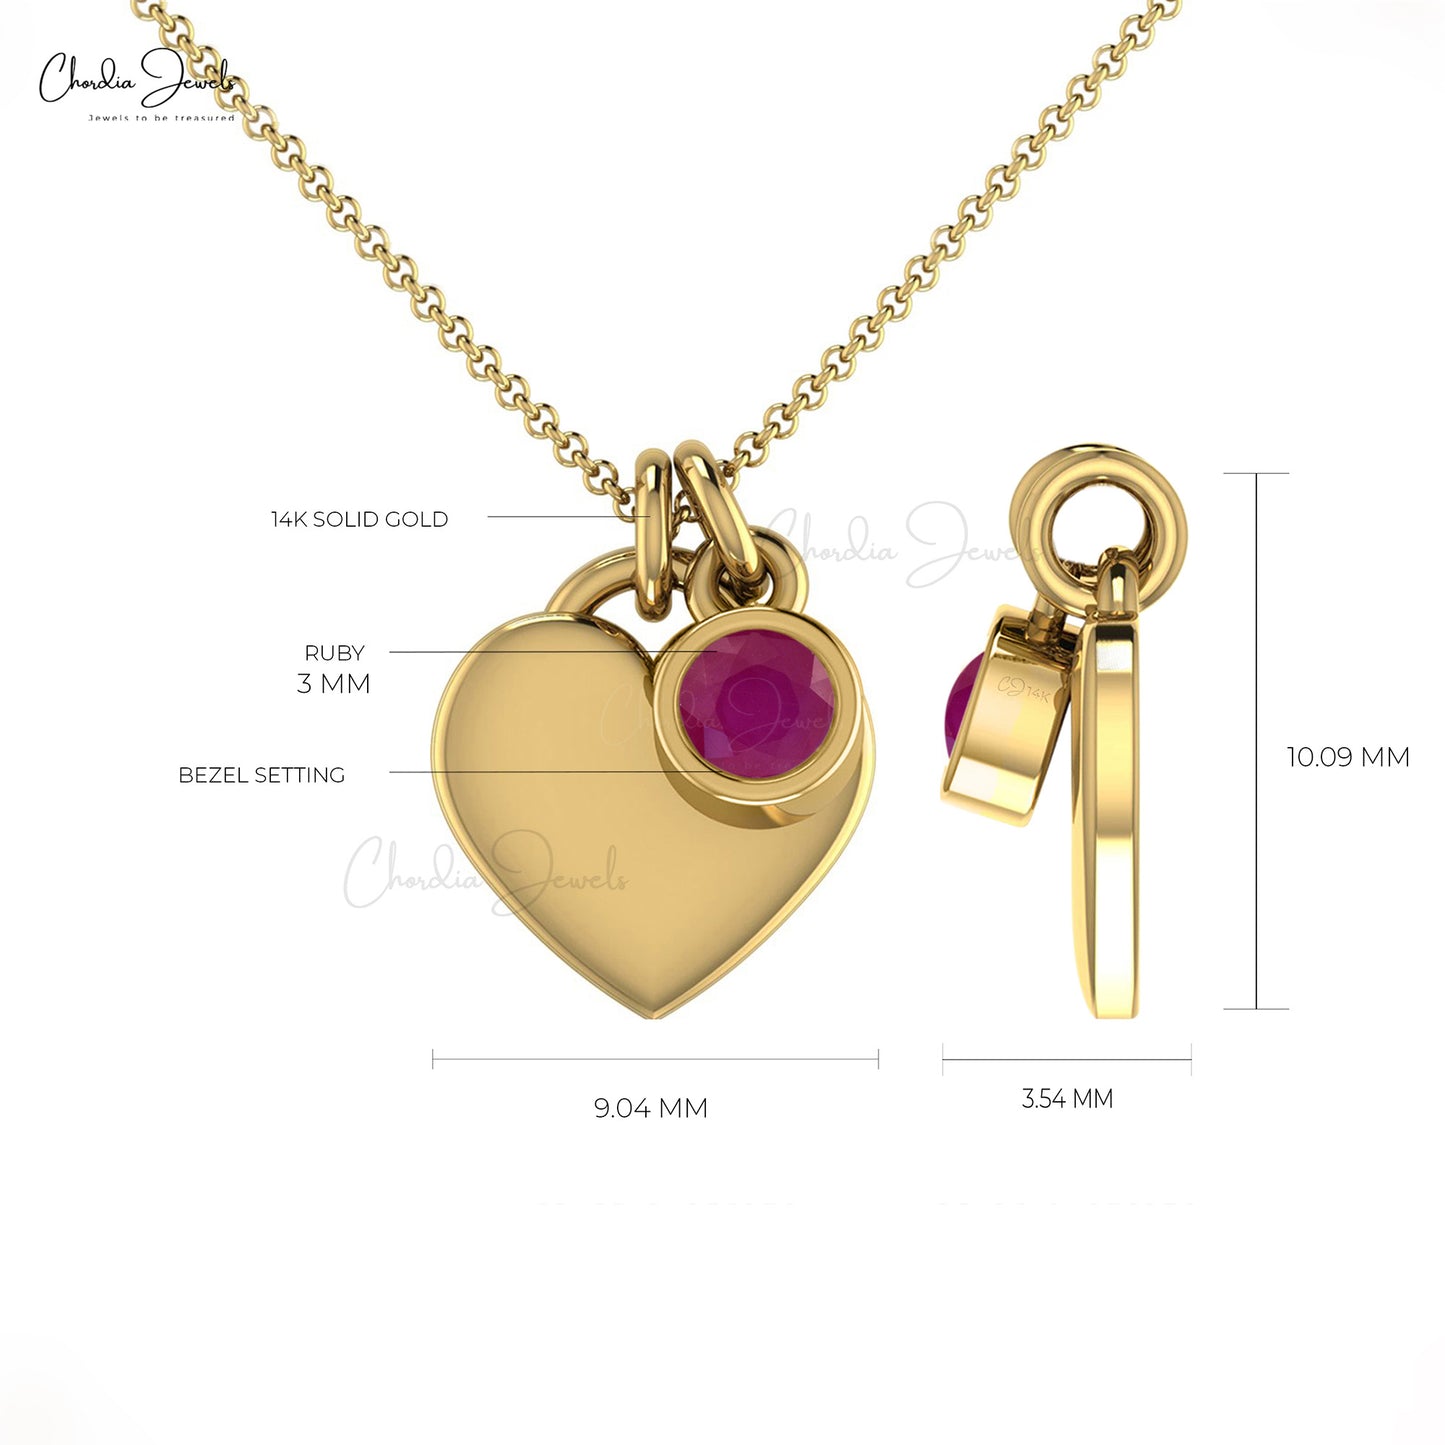 Buy 9ct Gold Anchor Pendant Necklace Men's Anchor Necklace Large Gold  Anchor Necklace Online in India - Etsy